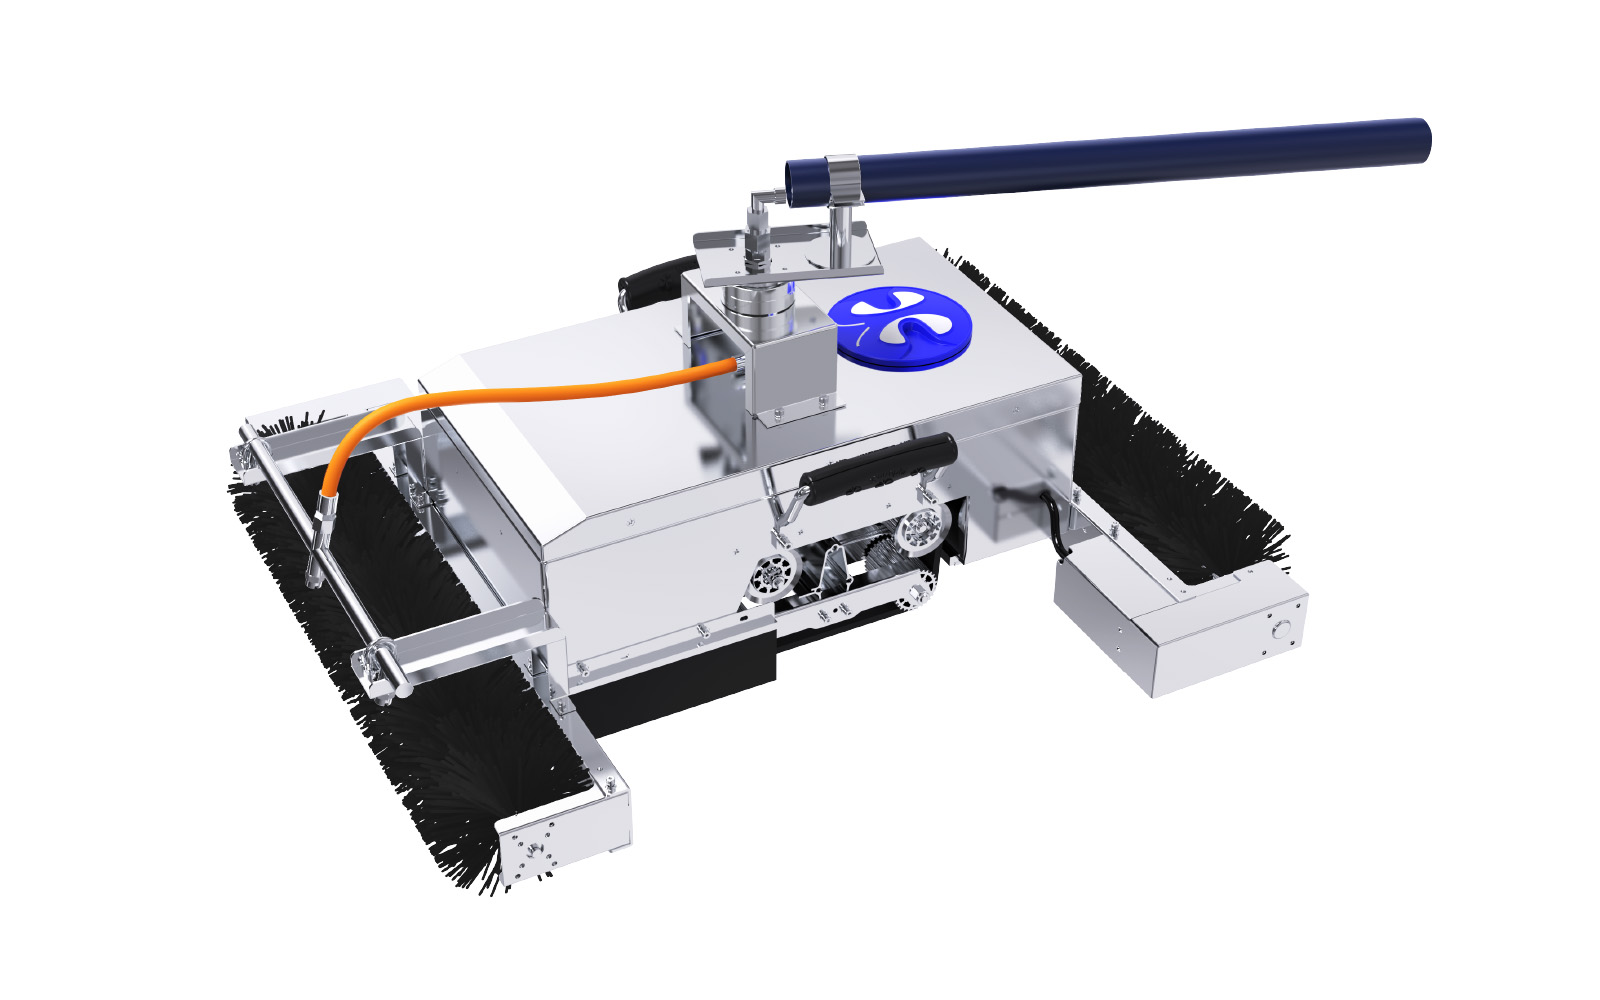 Fully autonomous PV cleaning robot, Kwun B10L2